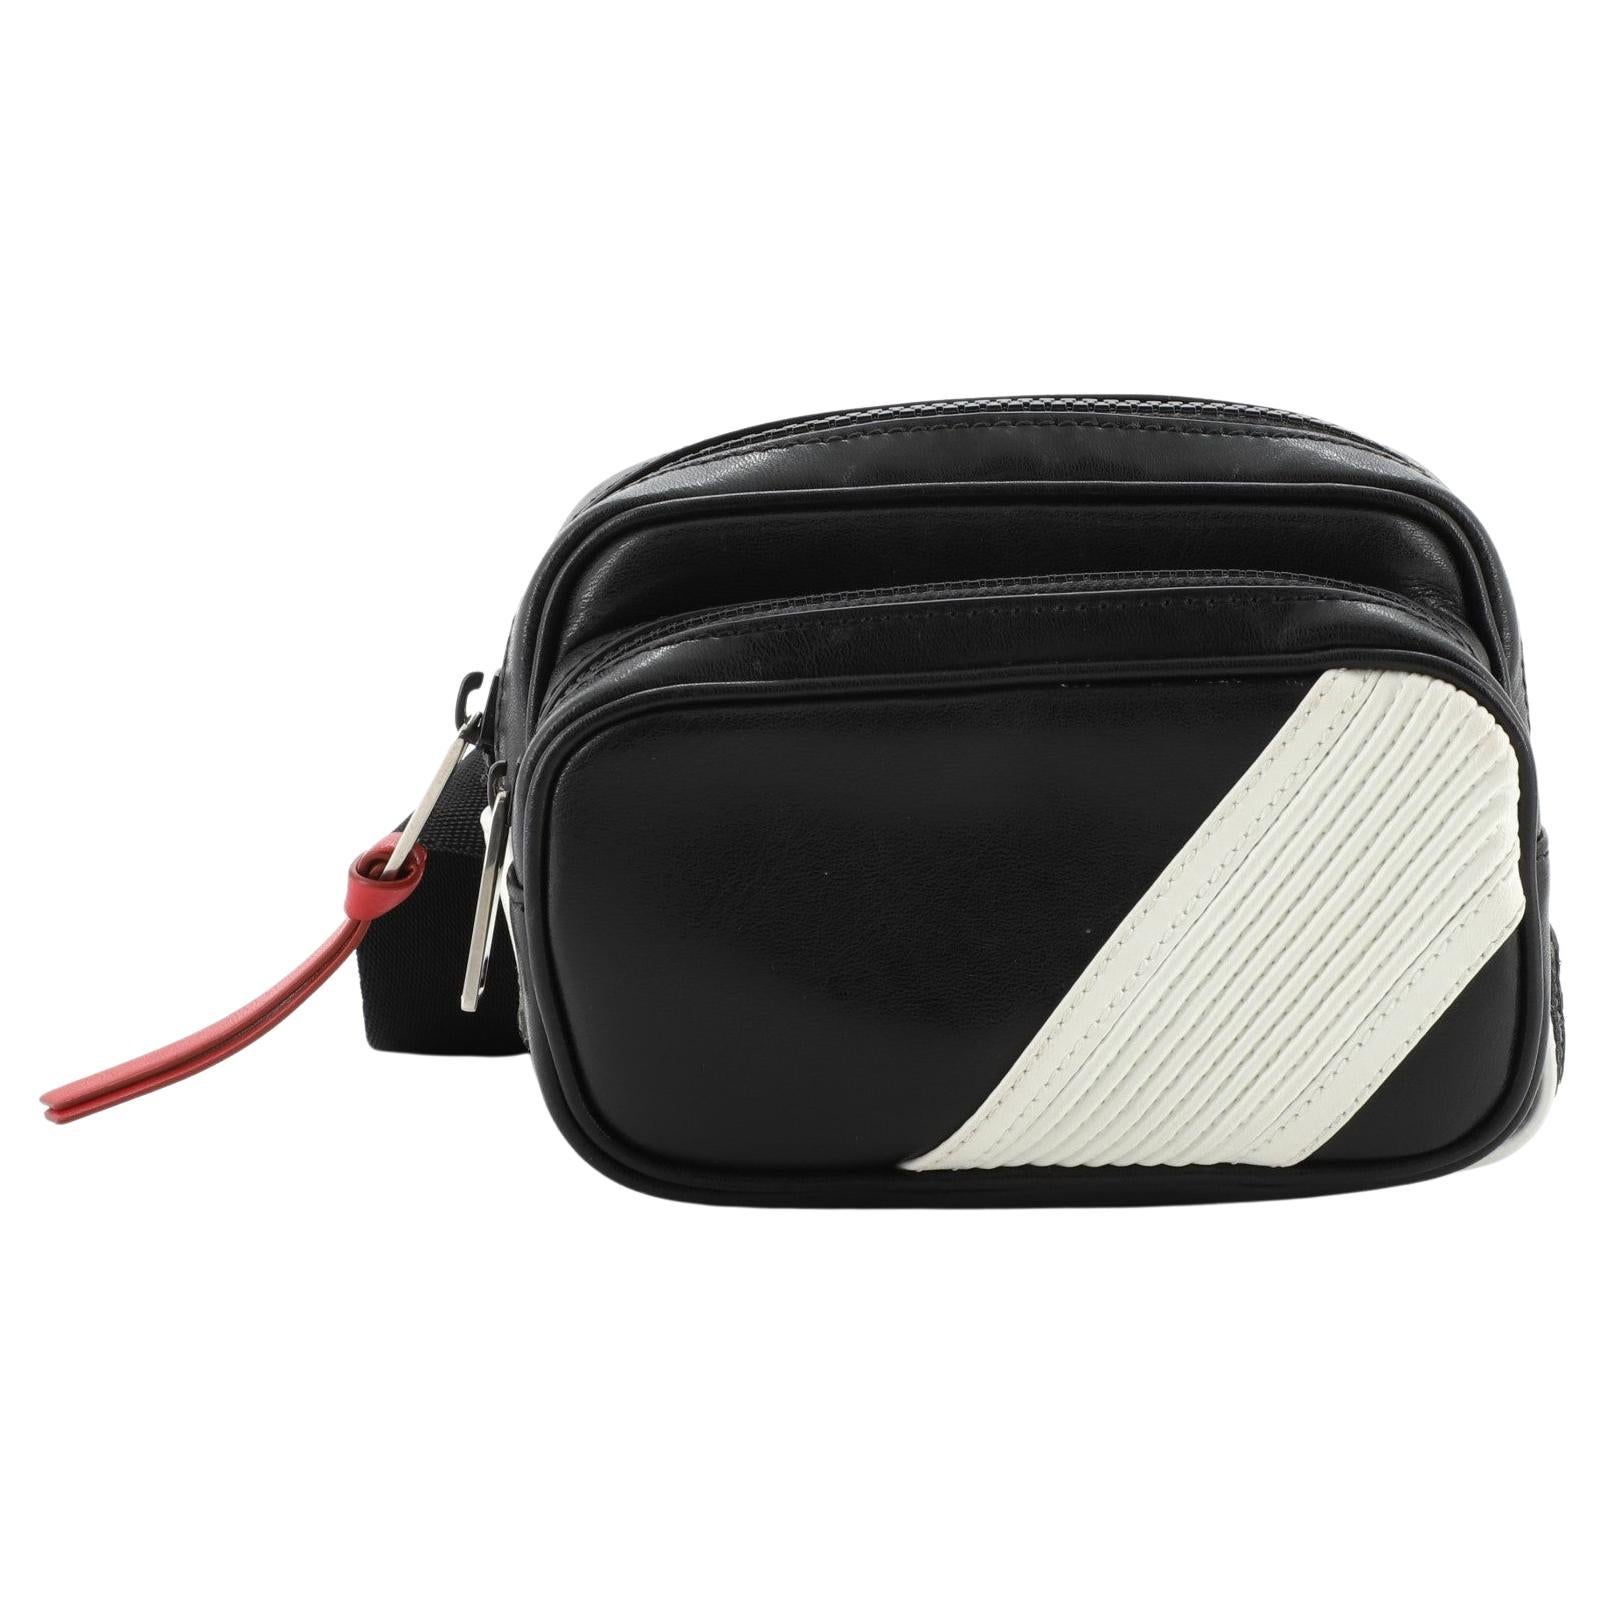 Givenchy MC3 Belt Bag Leather